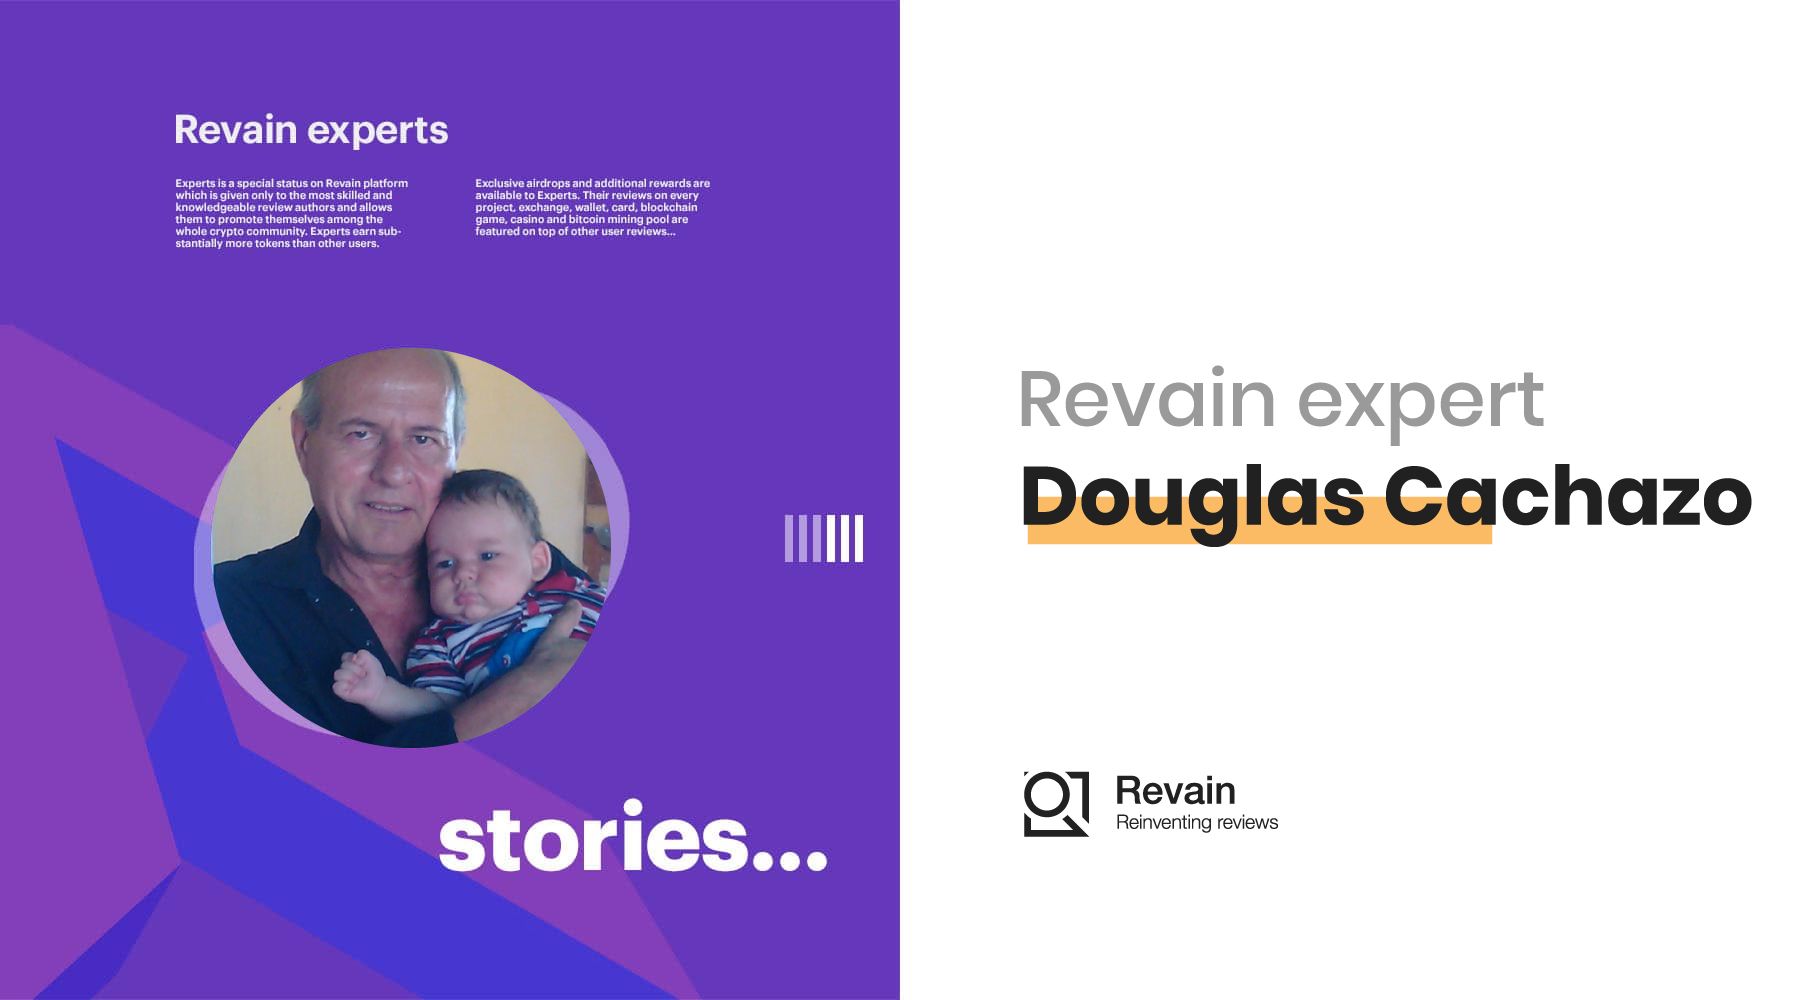 Douglas Cachazo's story